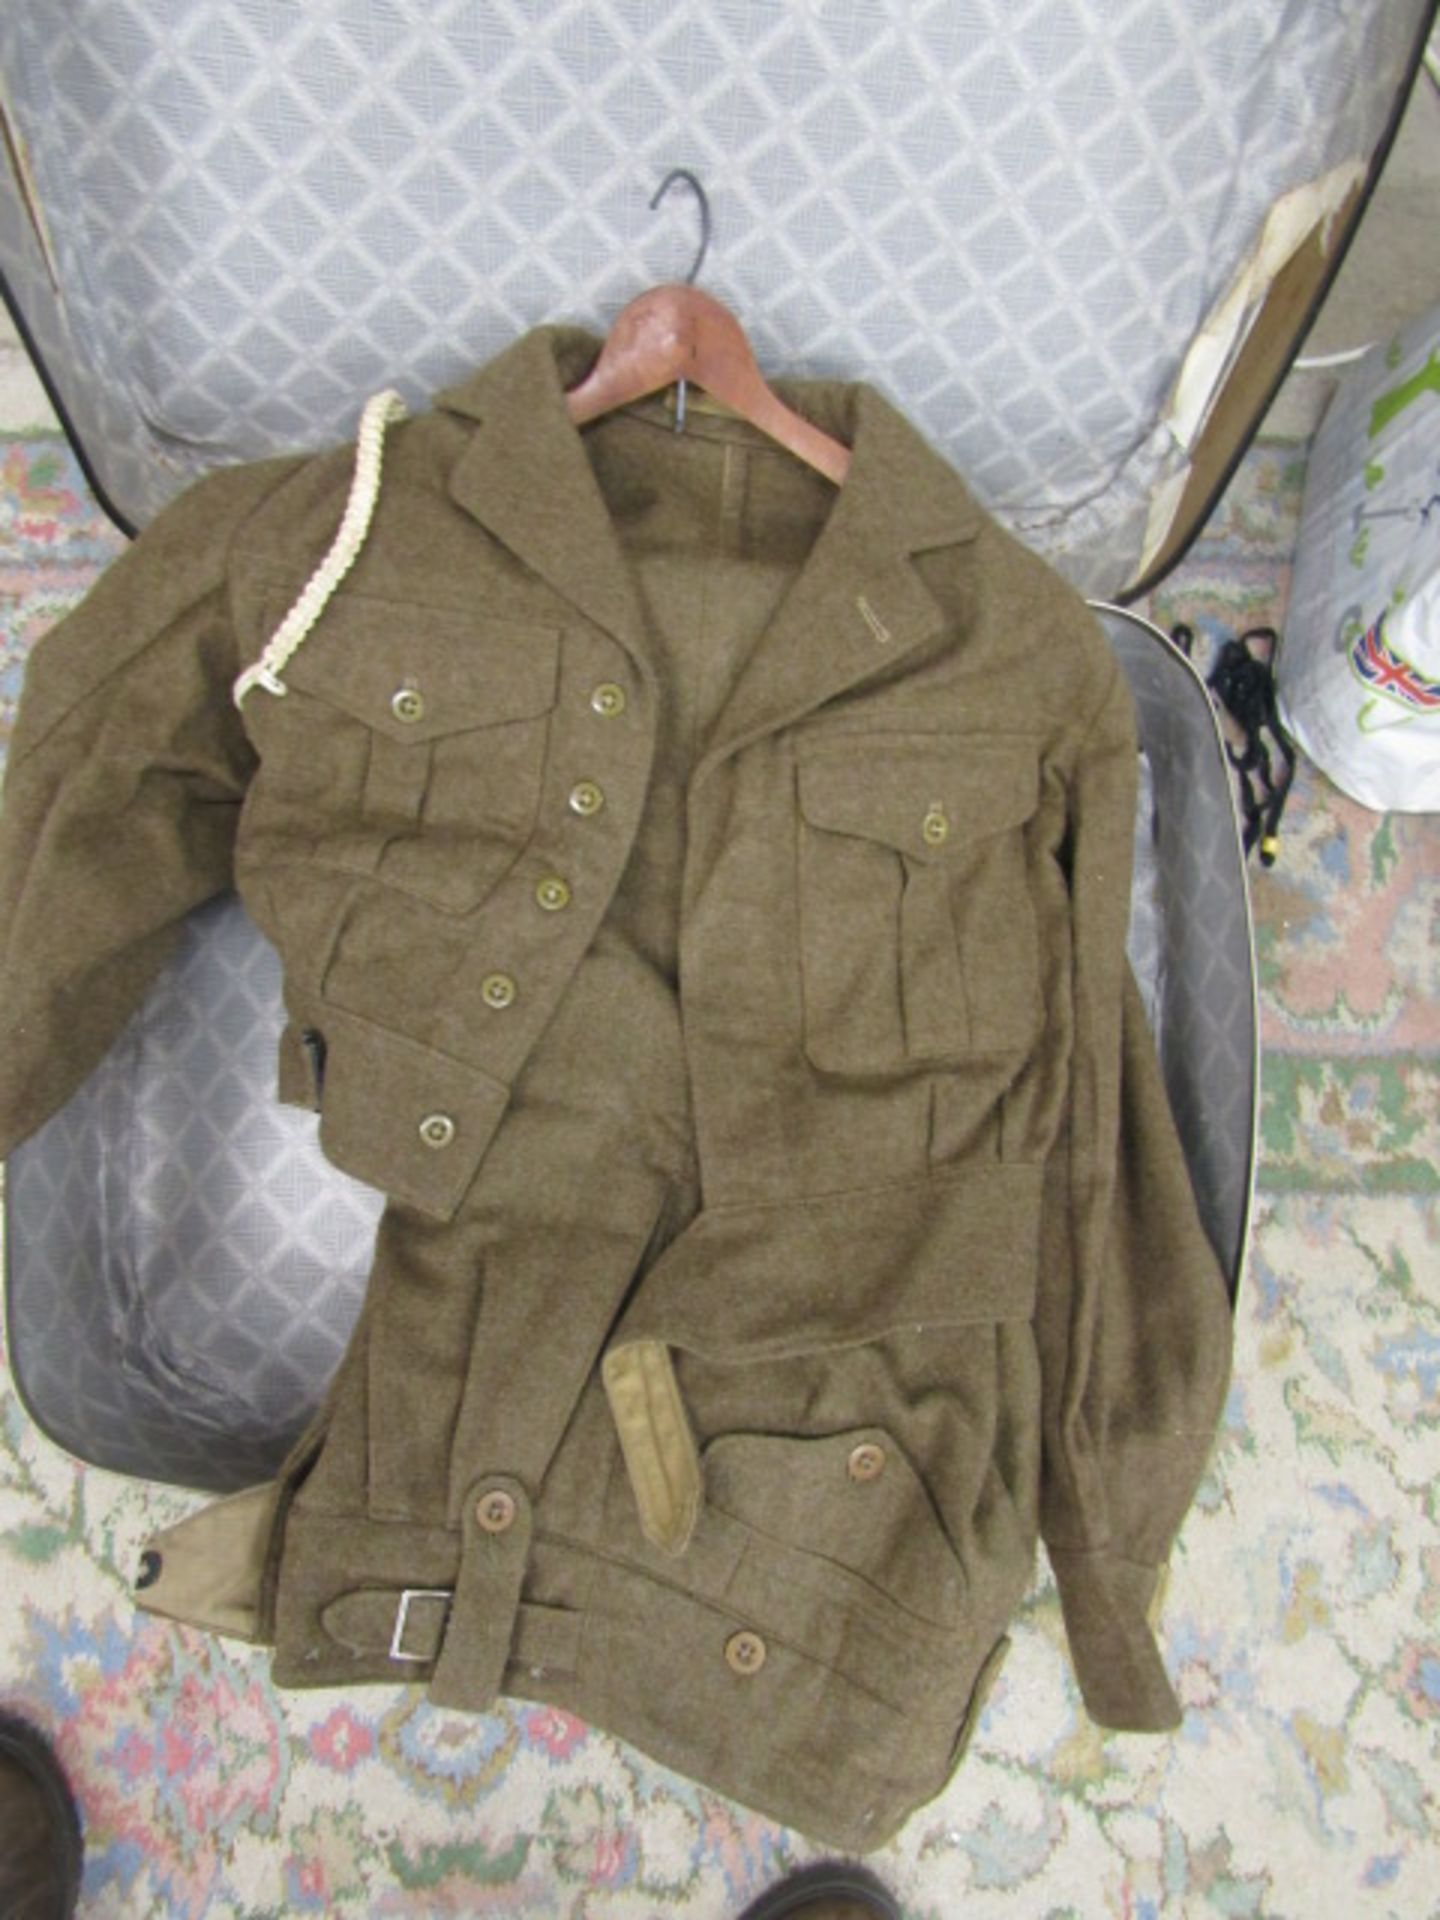 RHA uniform in suitcase